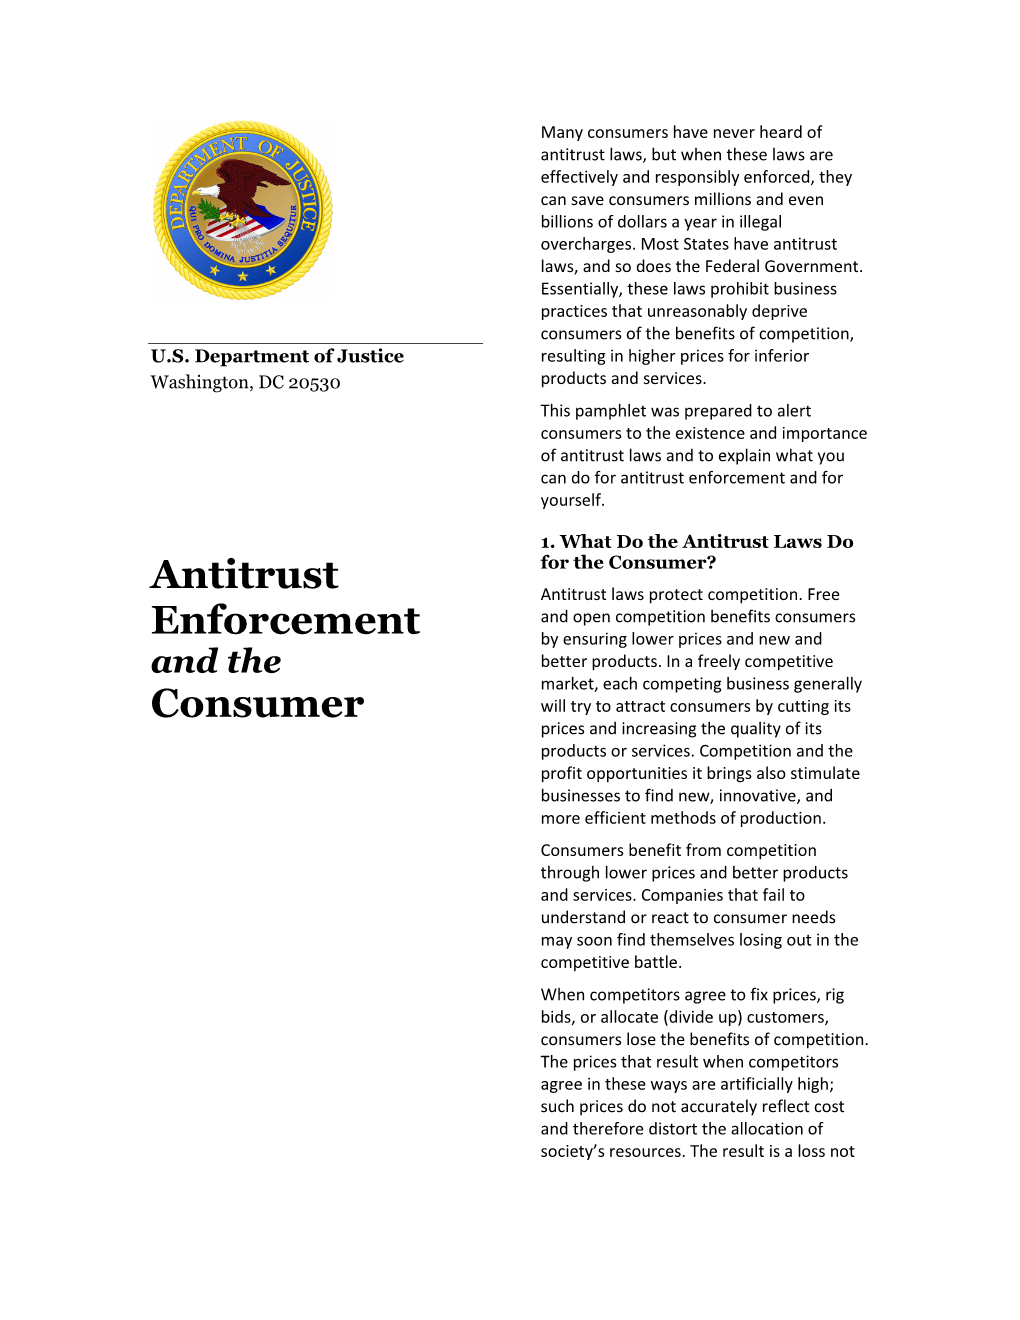 Antitrust Enforcement and the Consumer